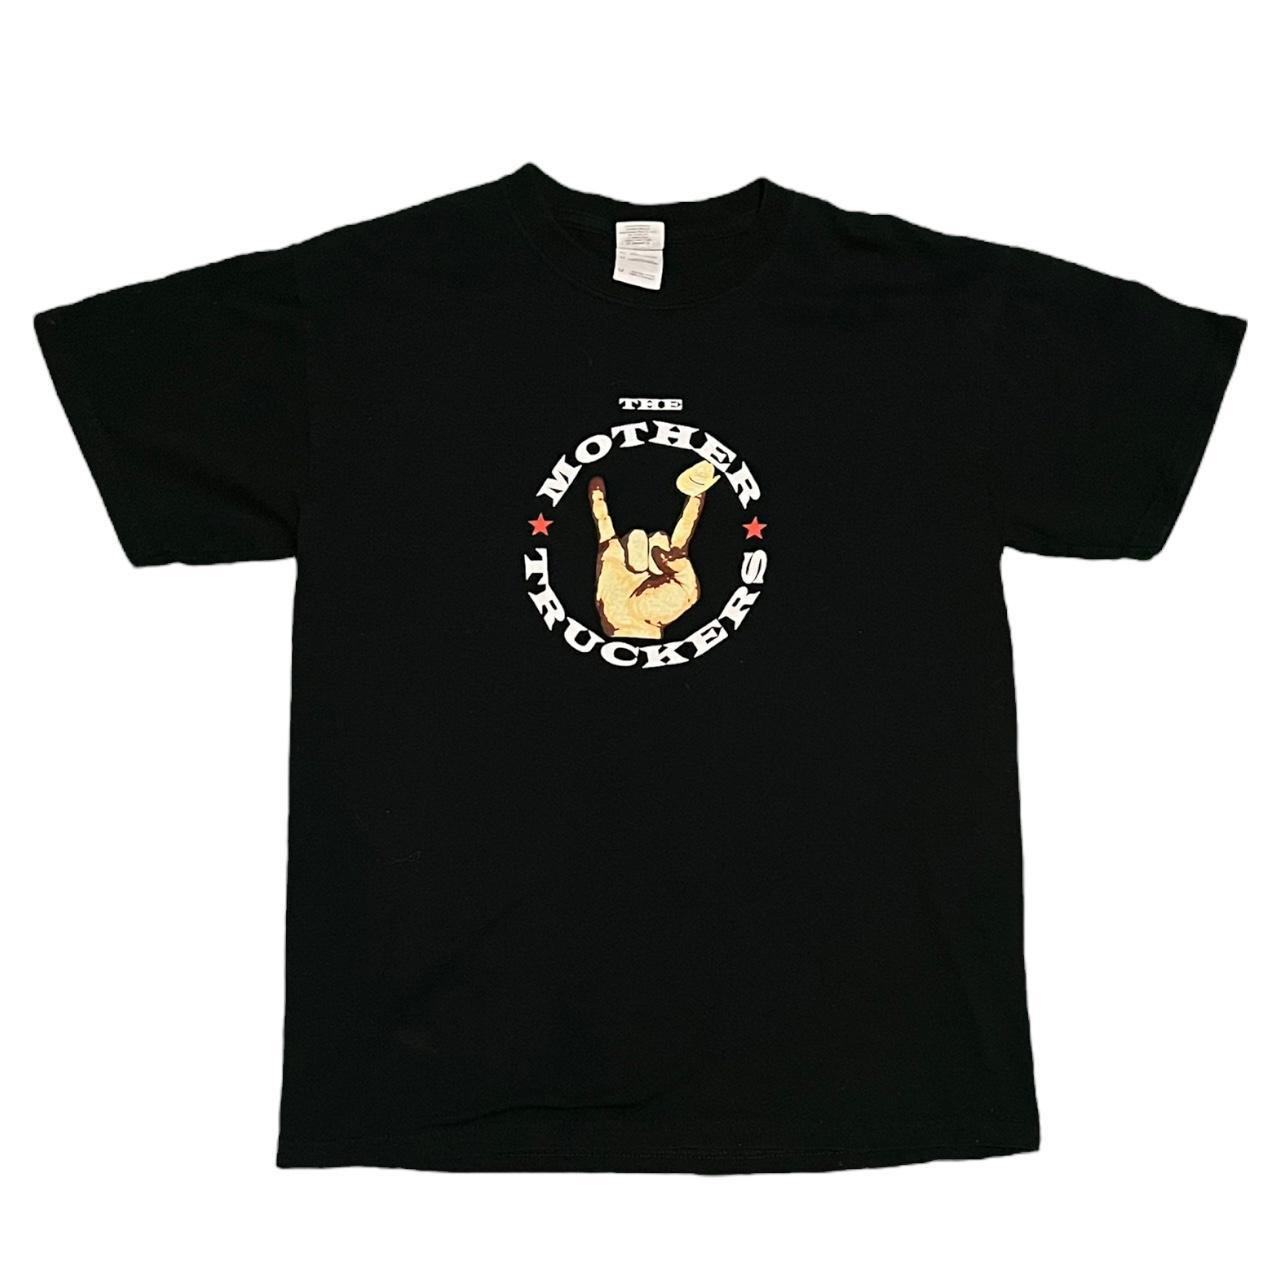 American Vintage Men's Black T-shirt | Depop